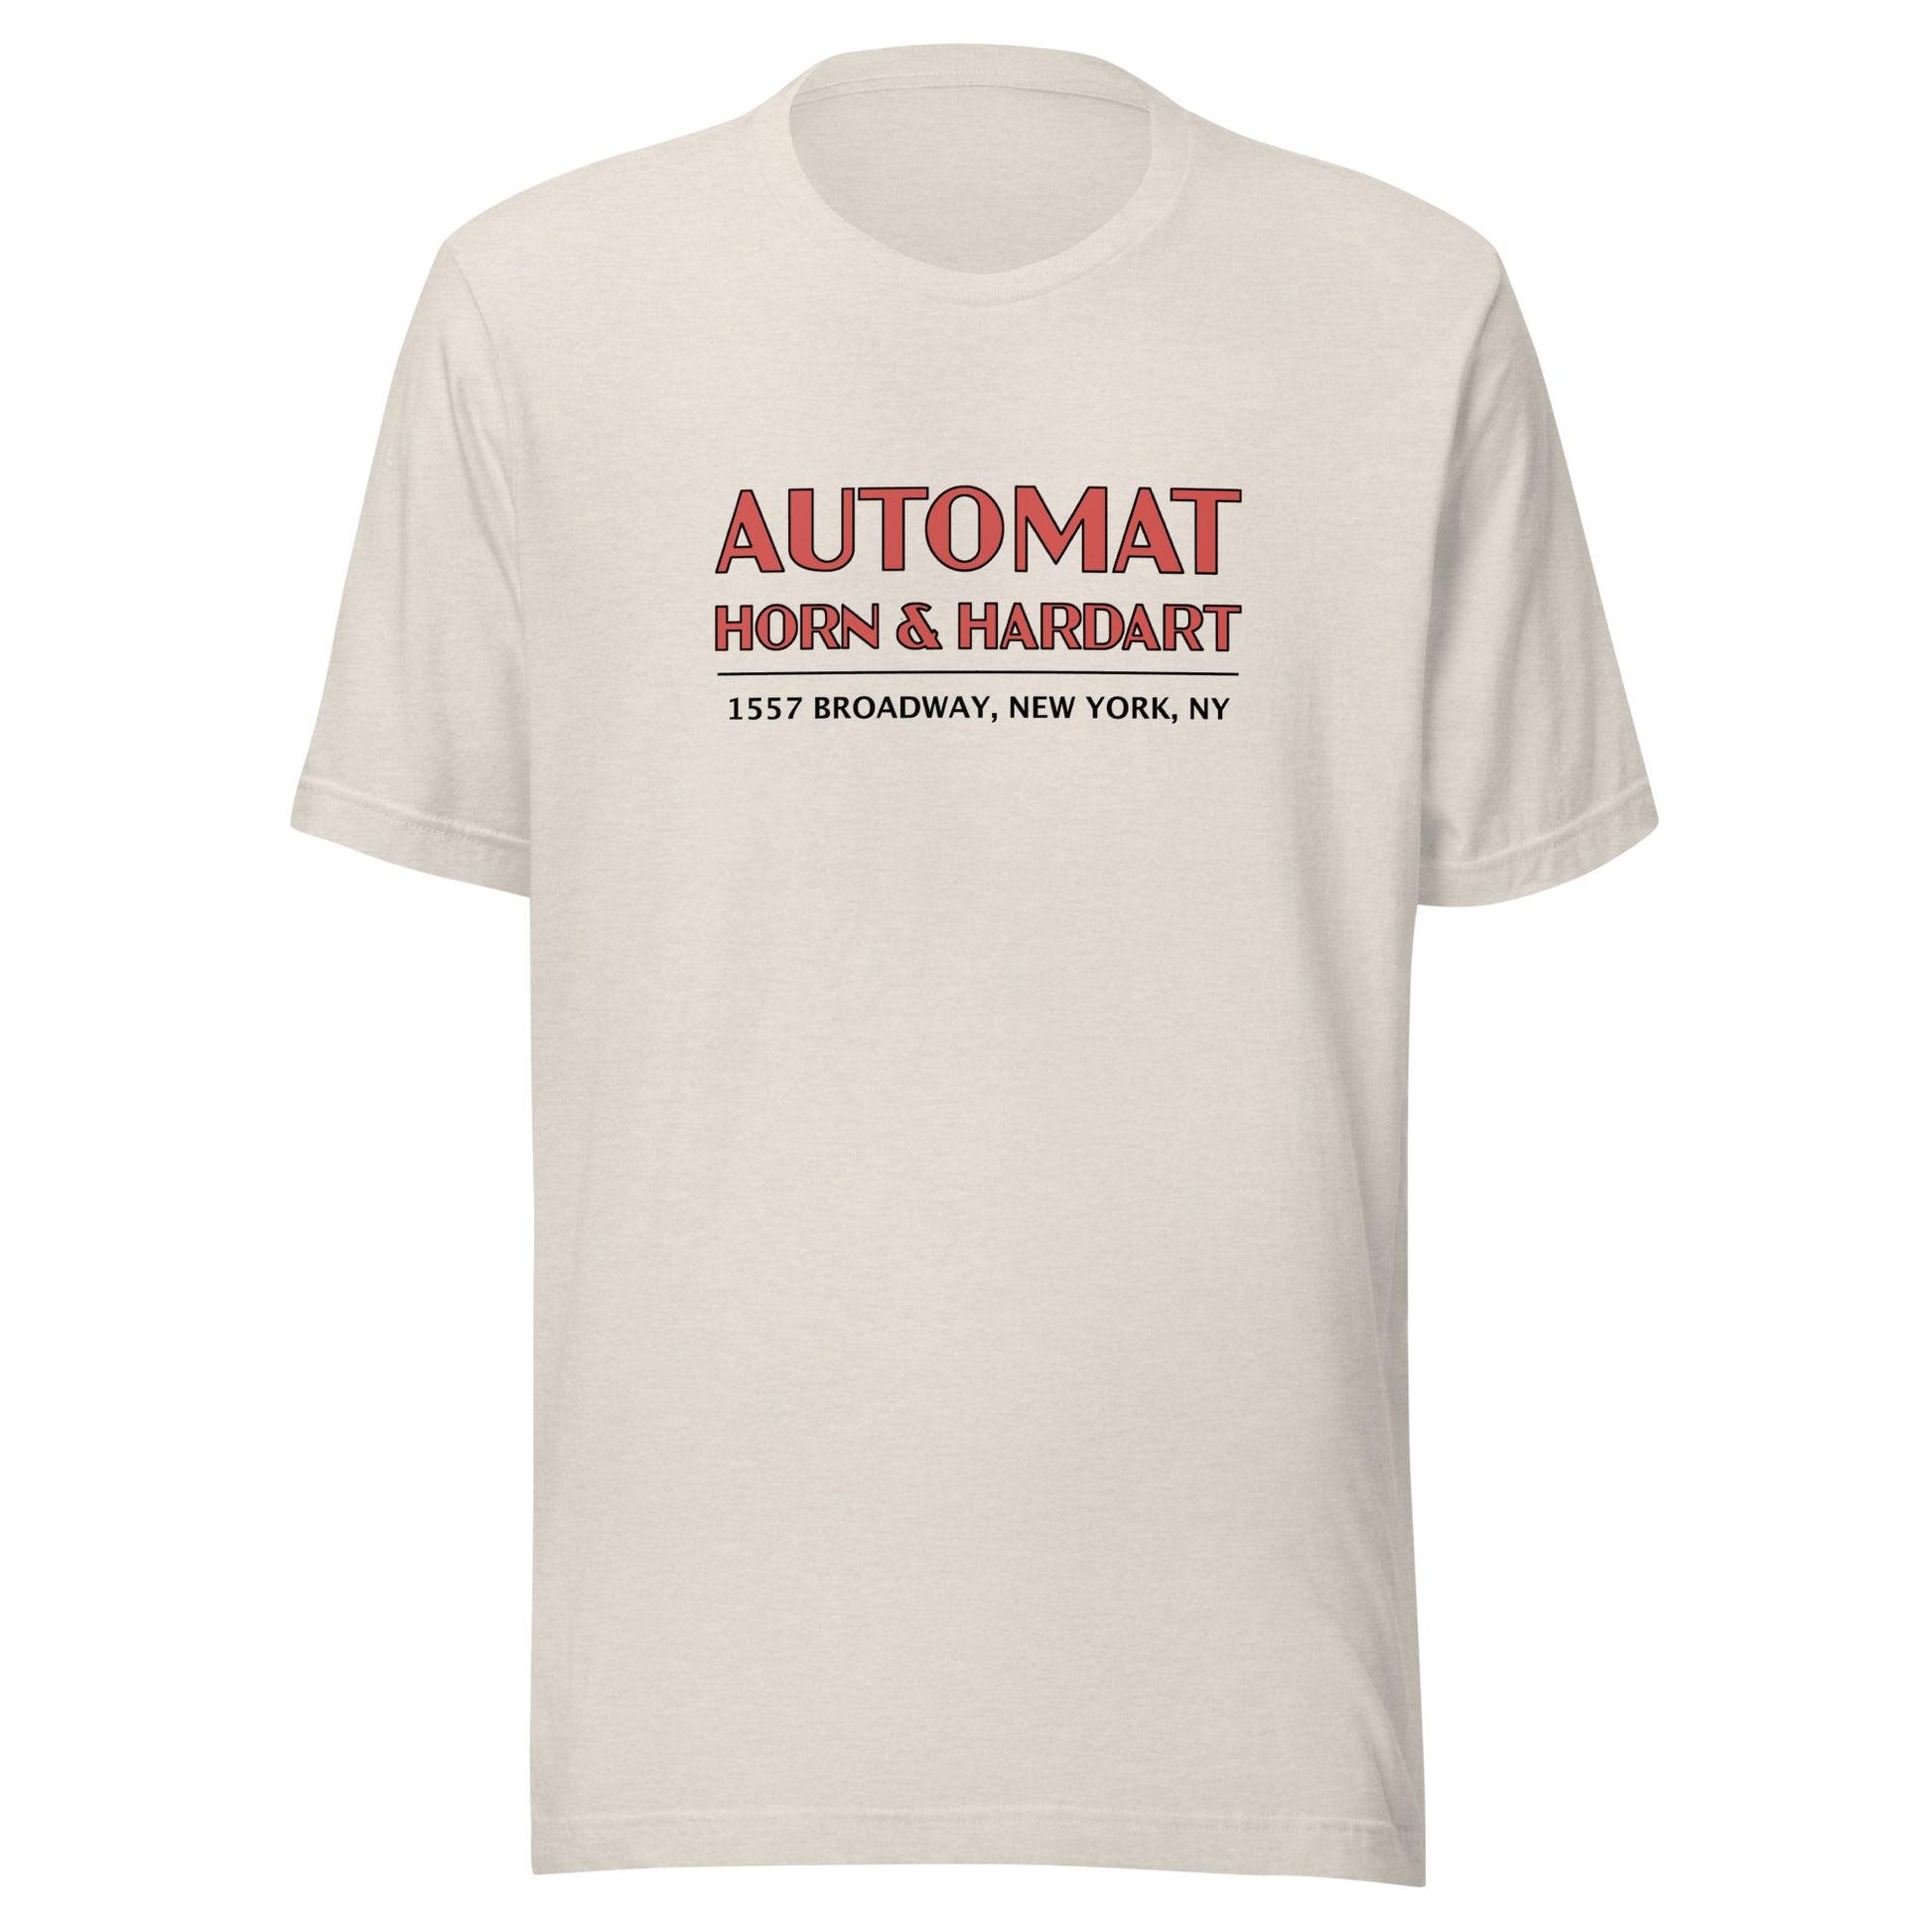 Automat Horn & Hardart t-shirt 1557 Broadway, New York, NY